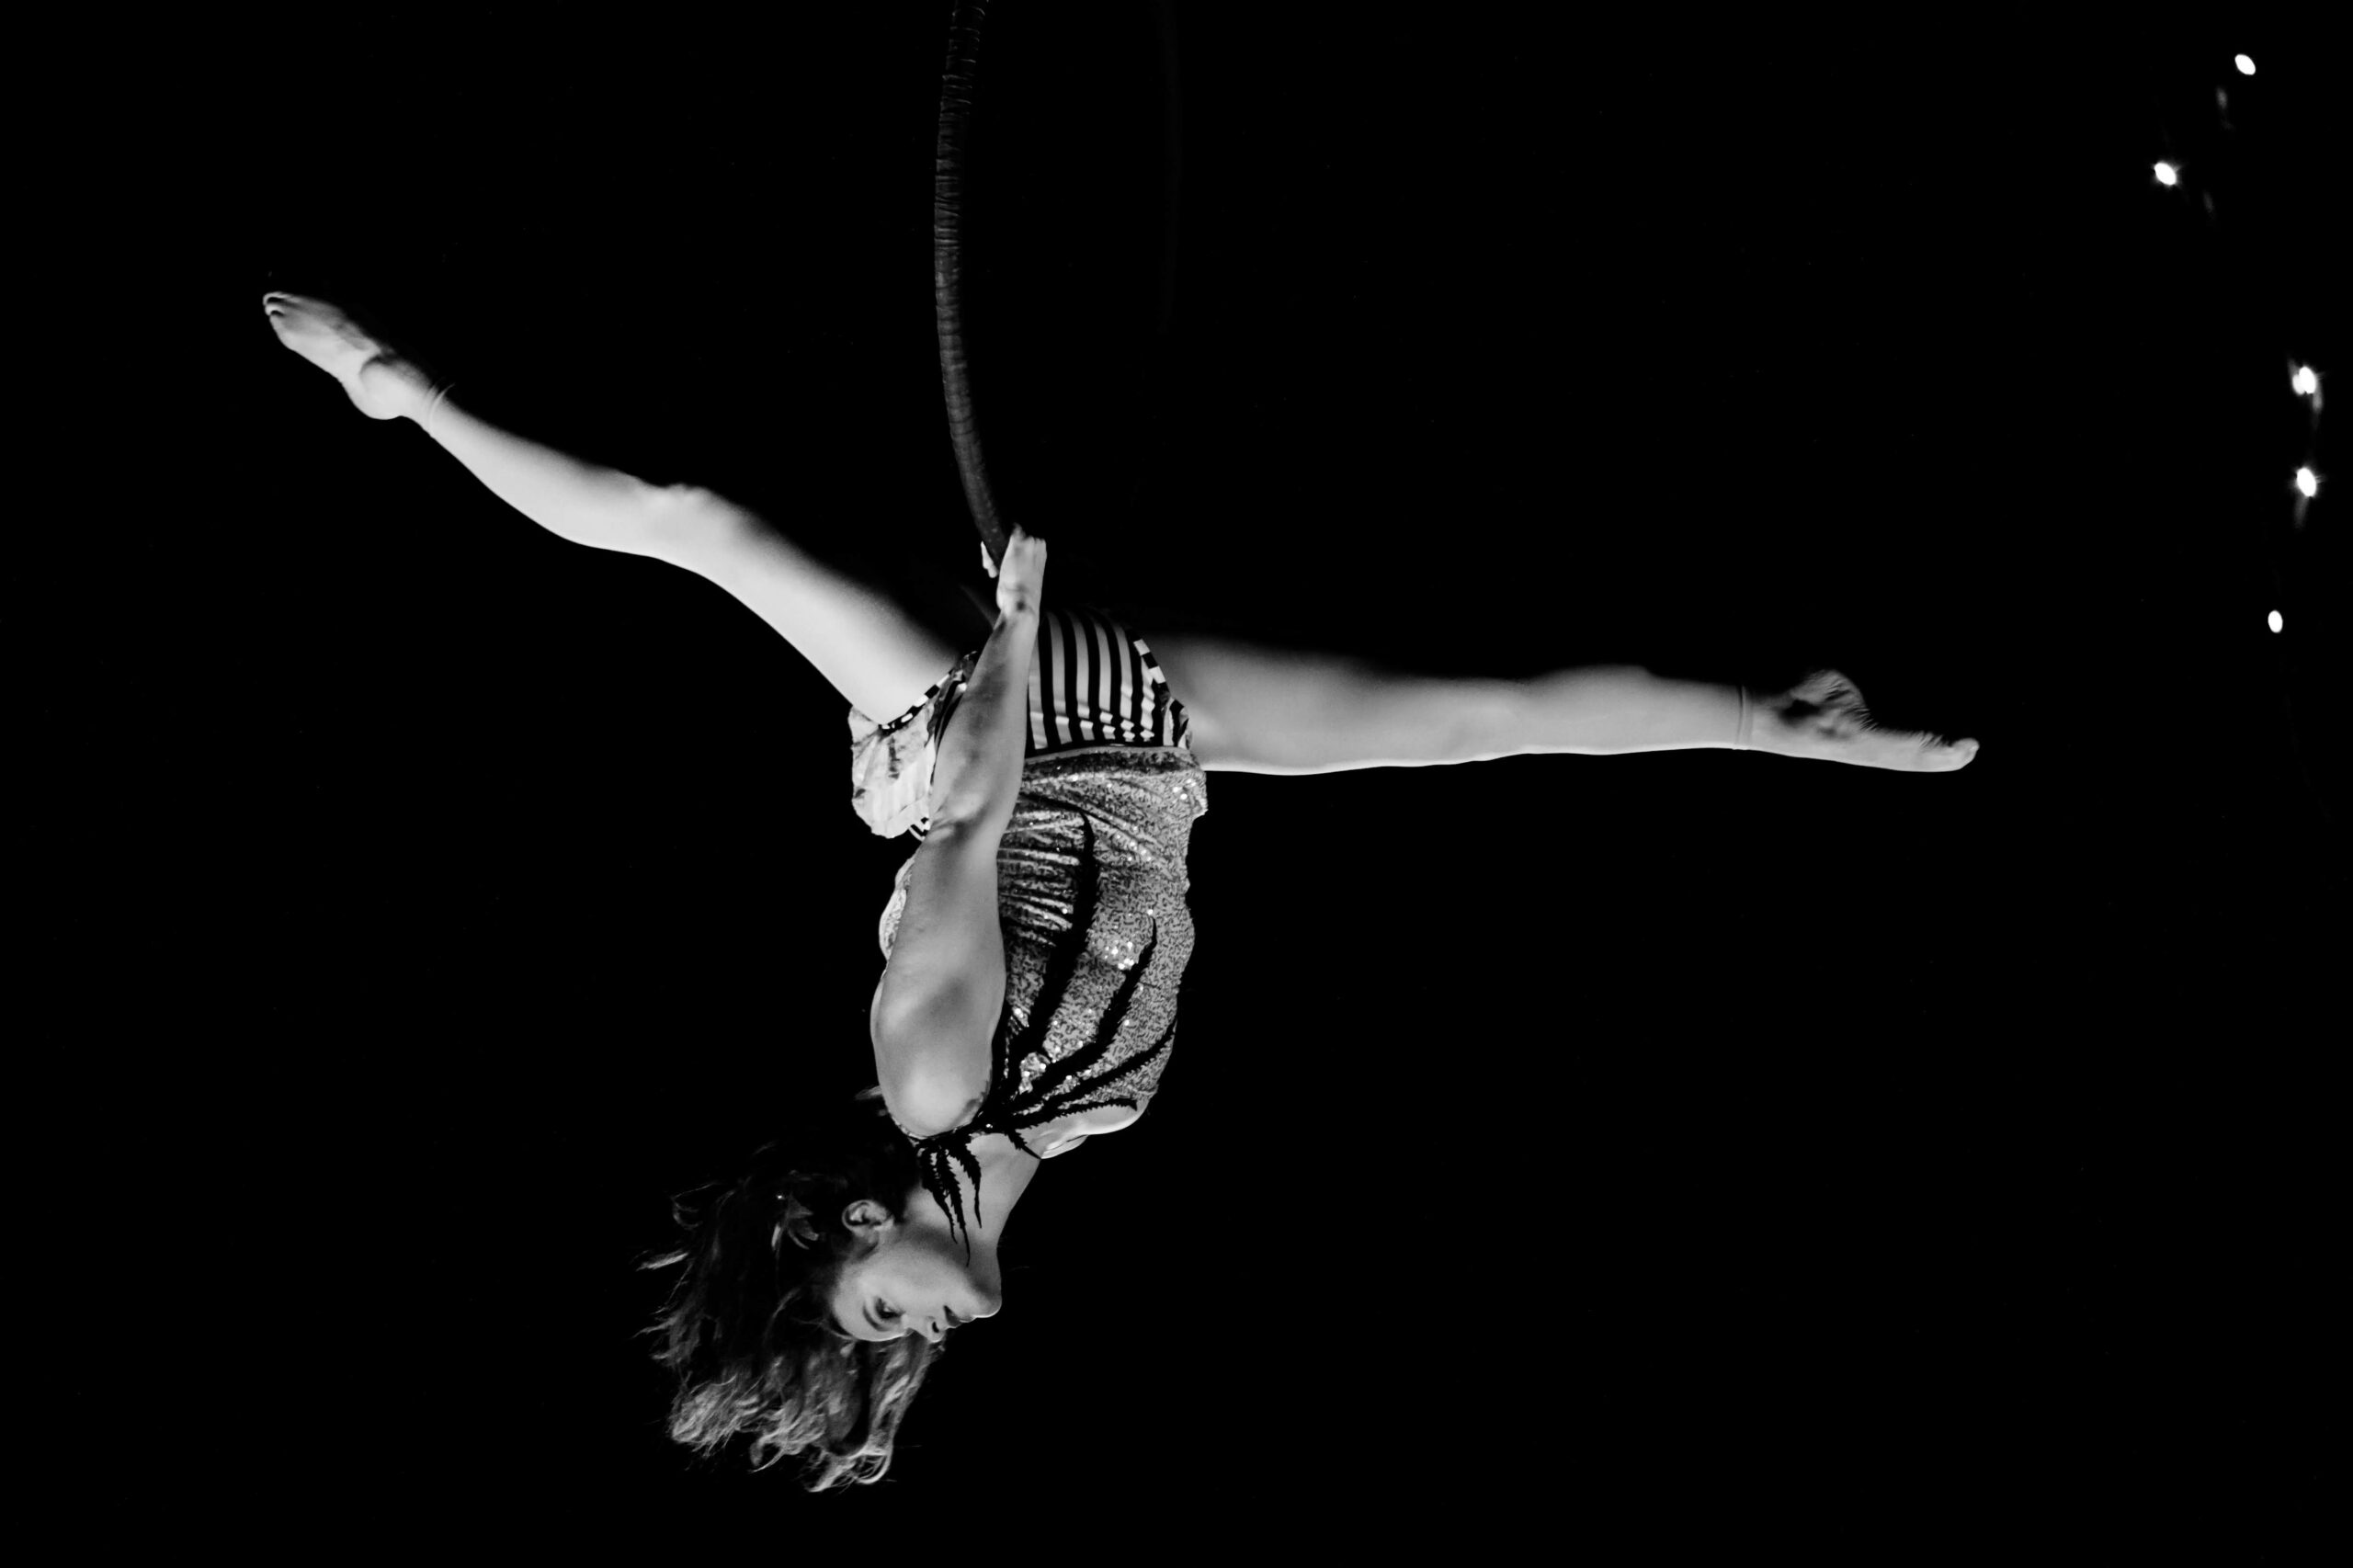 Marine Briens - Artiste de Cirque